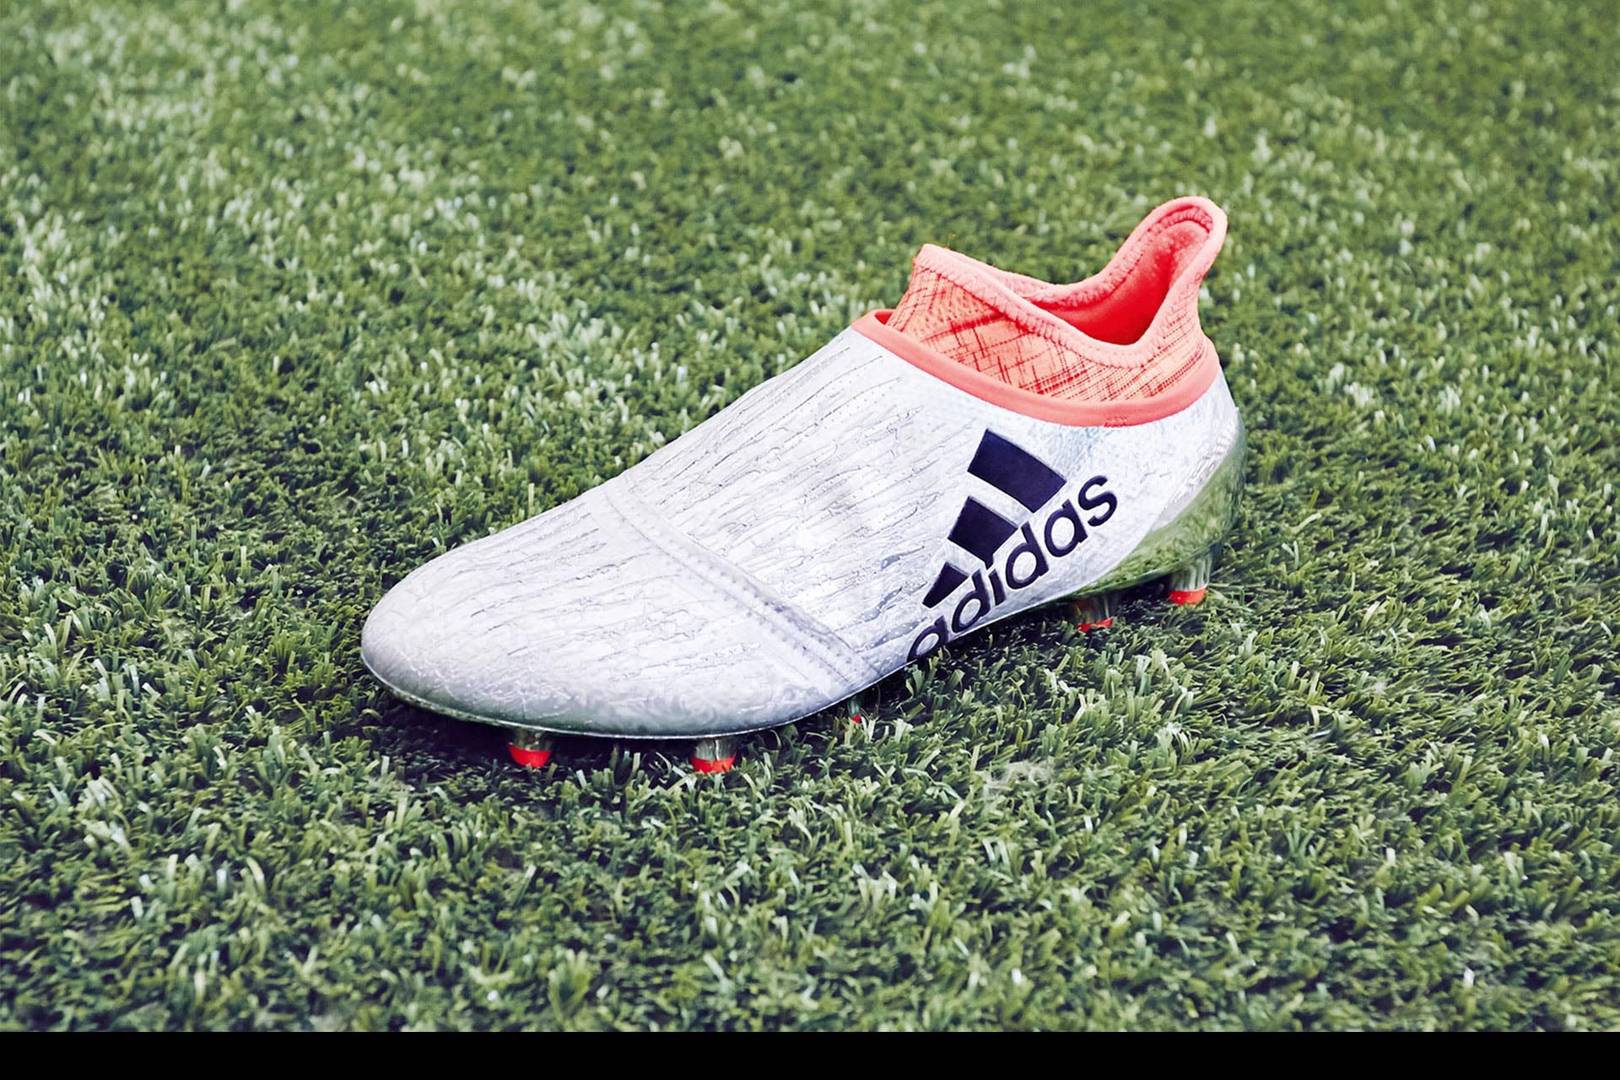 adidas 2019 football shoes